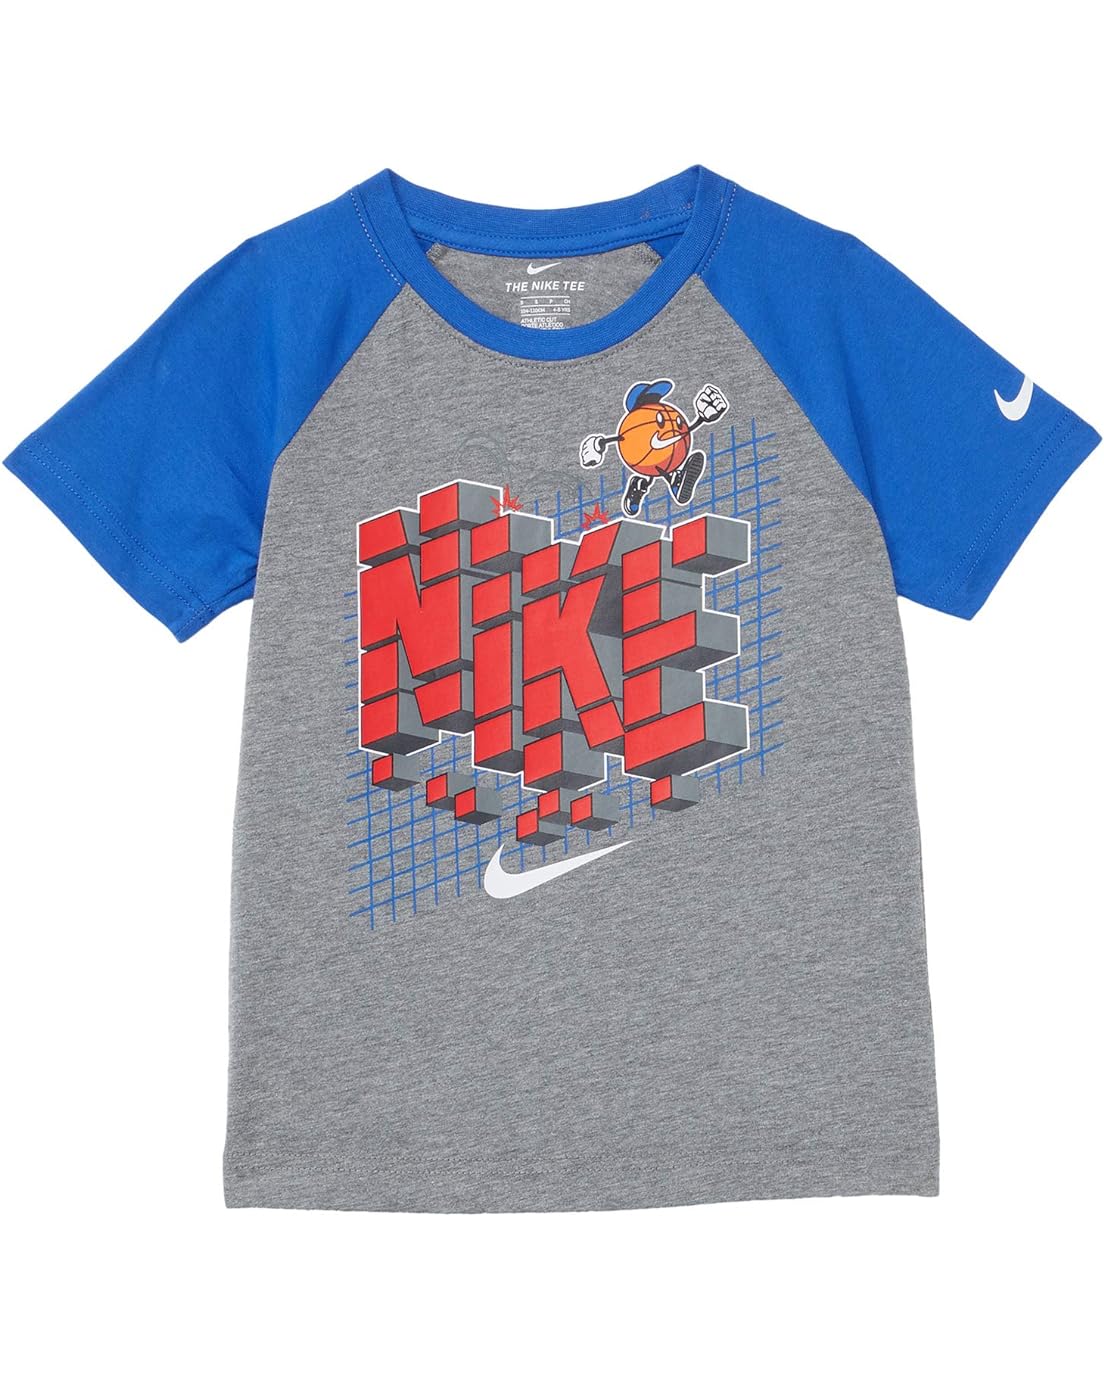 Nike Kids Basketball Raglan Graphic T-Shirt (Little Kids)